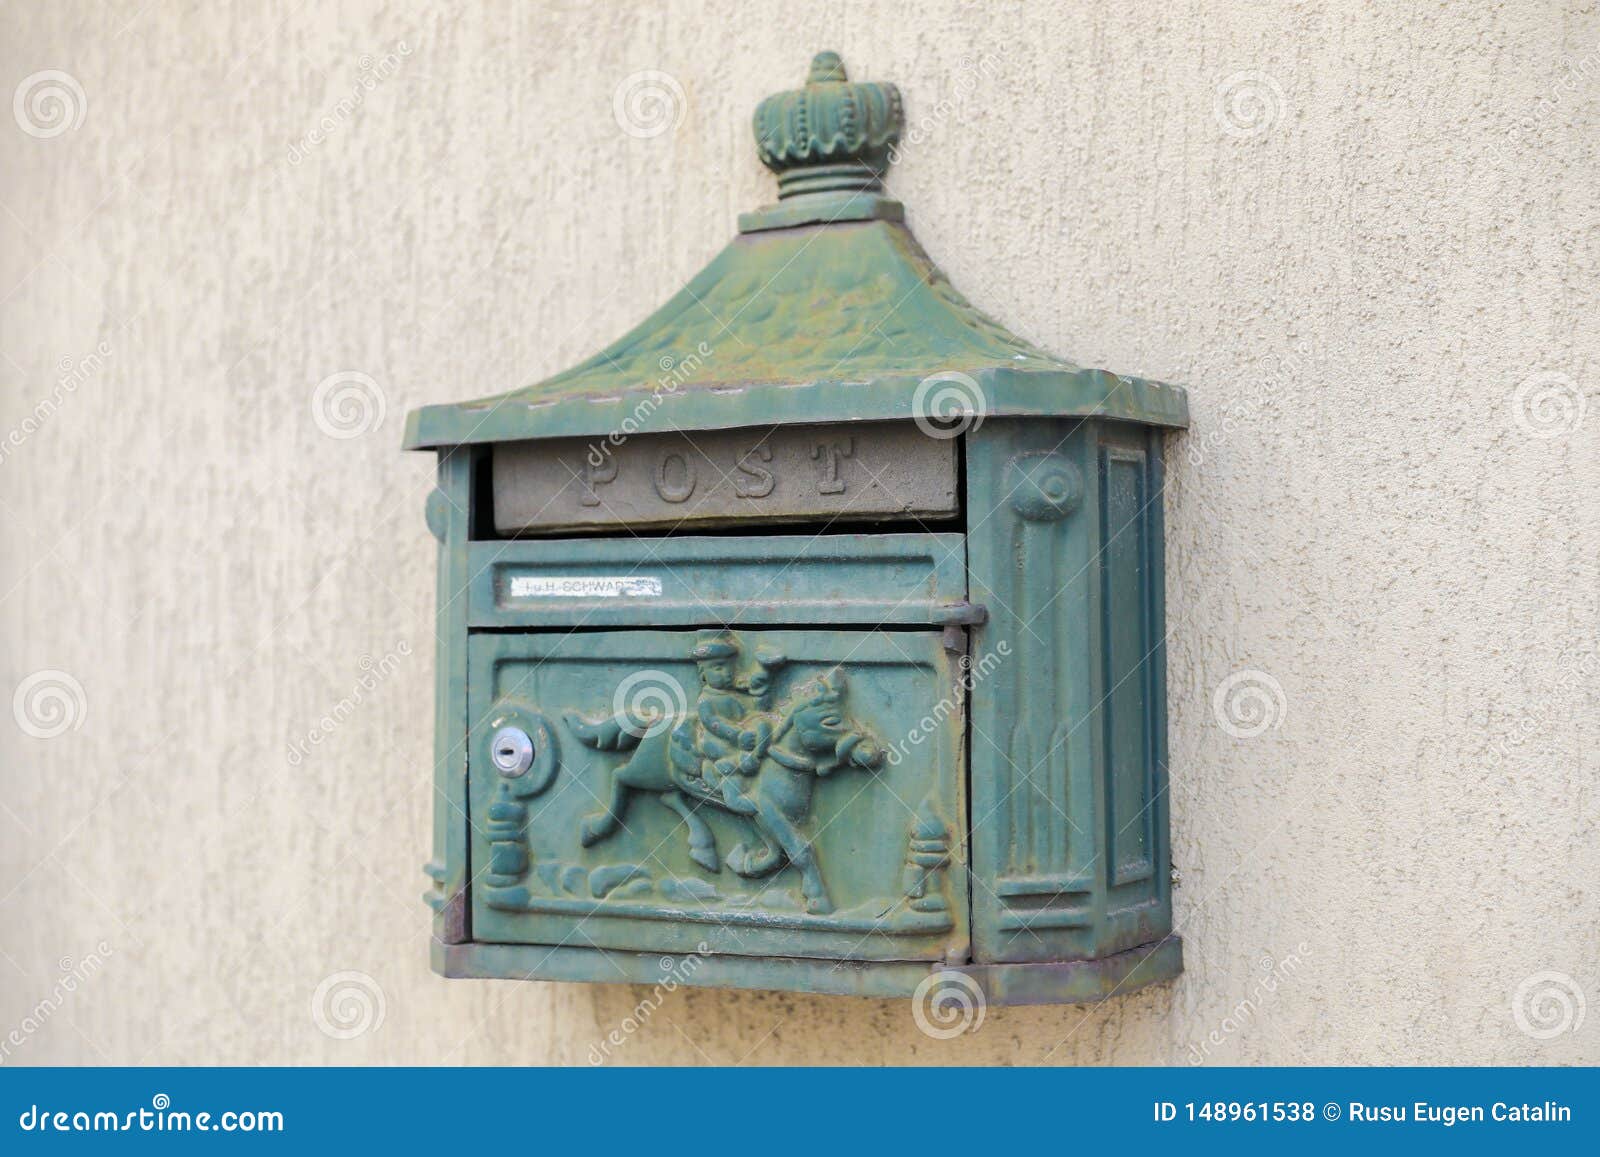 mailbox letter old metal poste